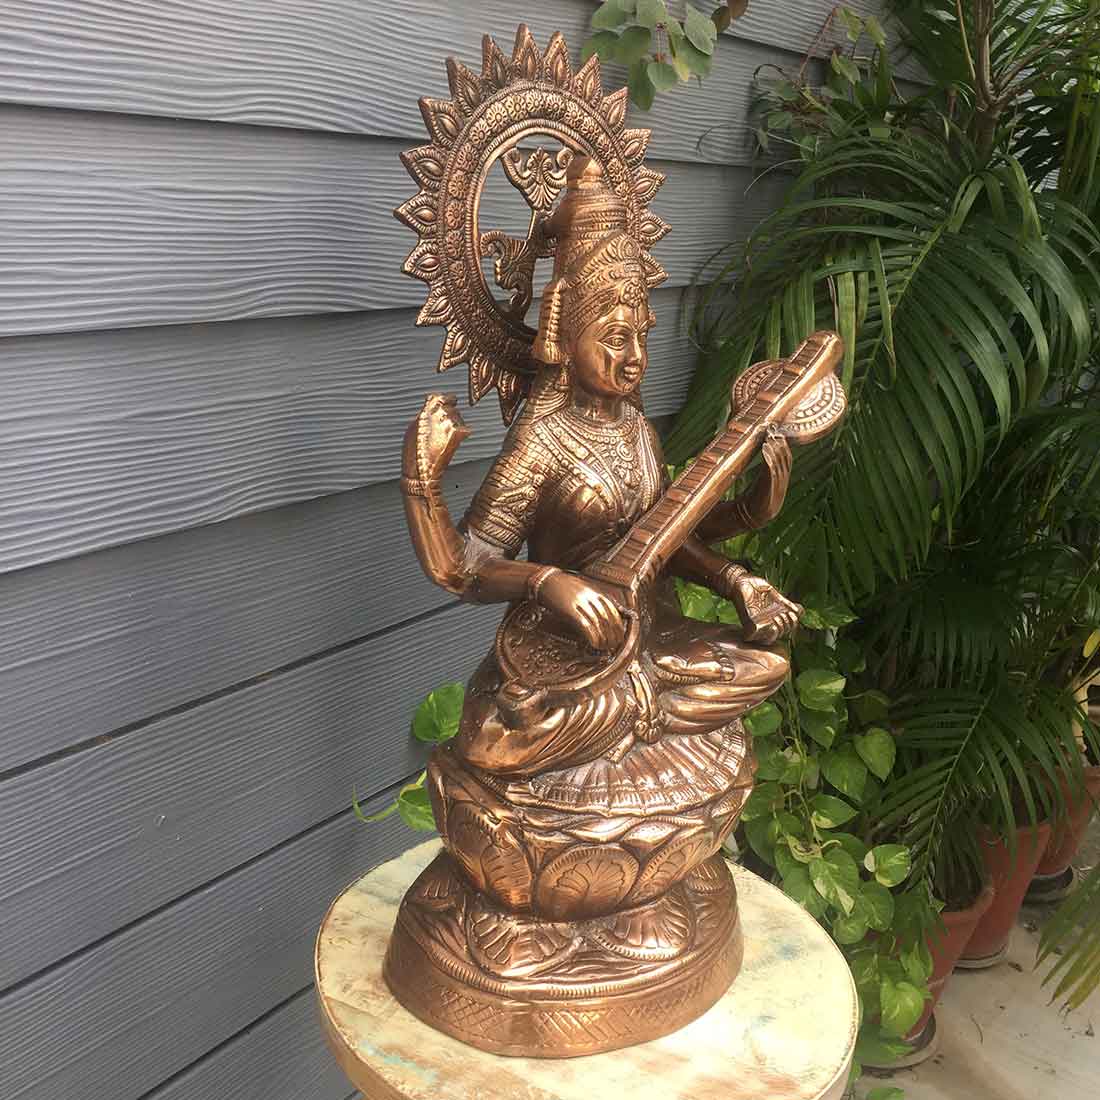 Big Saraswati Statue For Pooja, Office & Home decor - 25 inch - ApkaMart